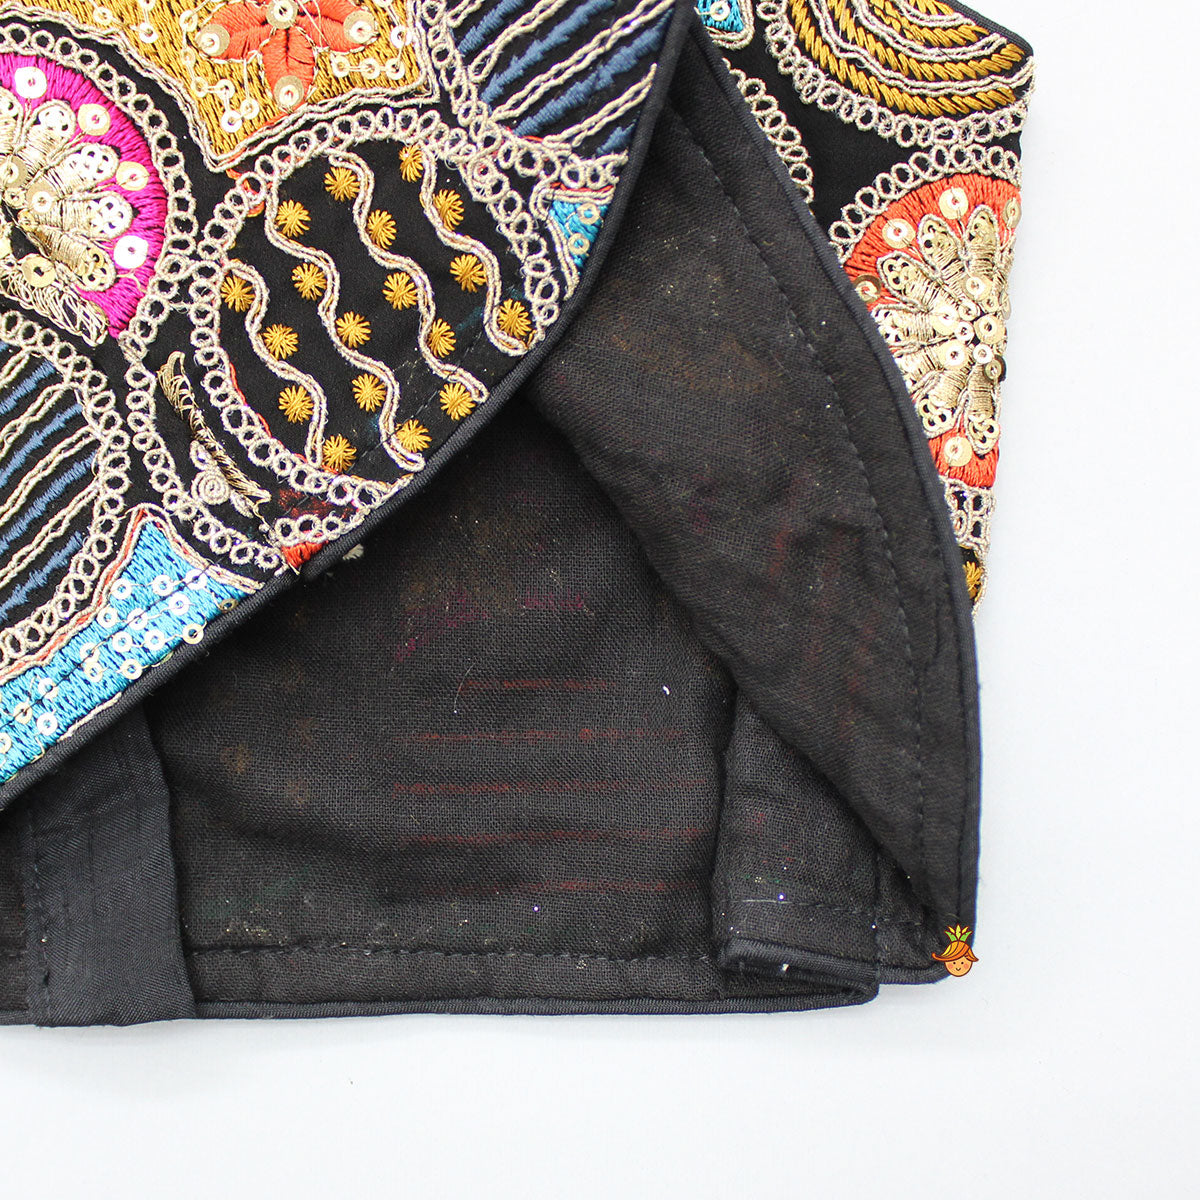 Heavy Embroidered Loop Detail Black Top And Colourful Fringes Tassels Enhanced Lehenga